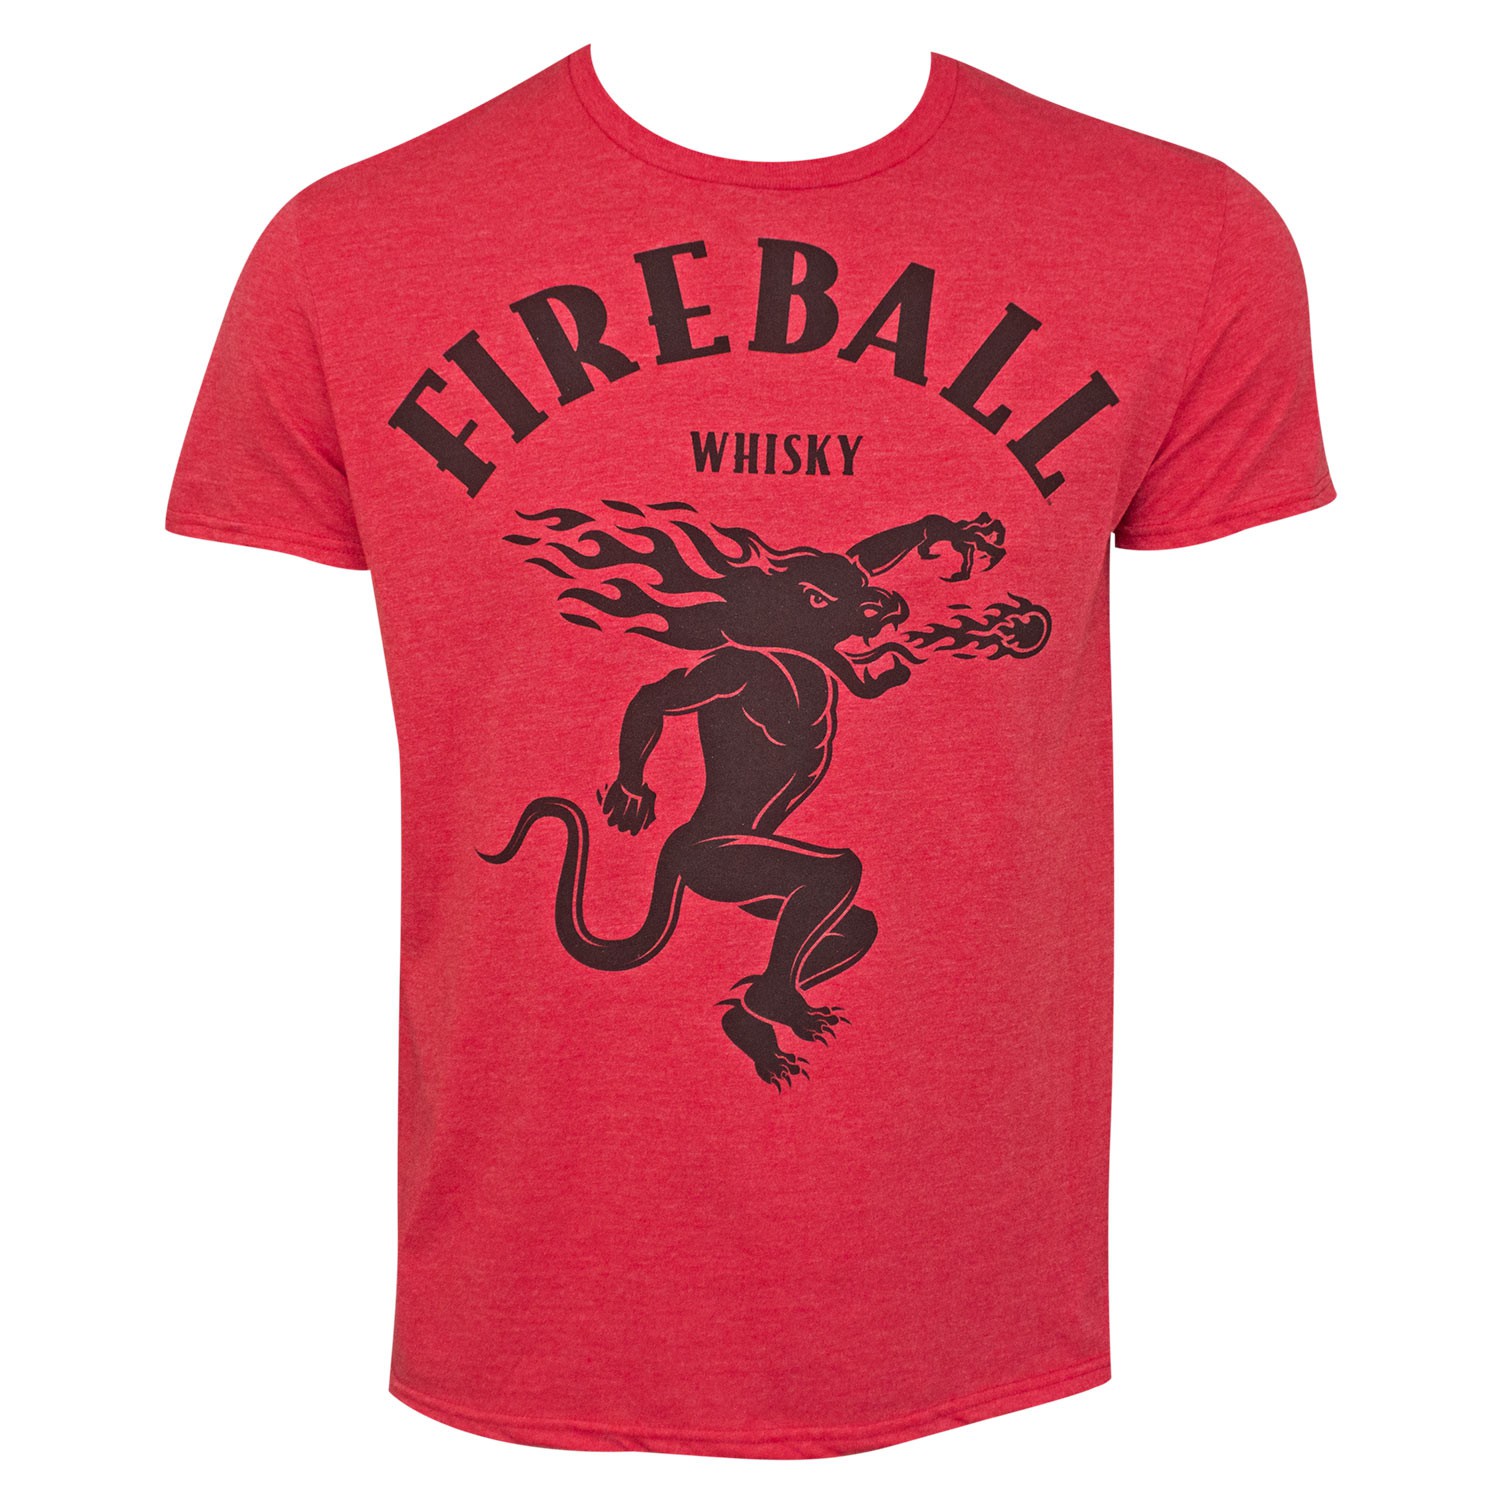 Fireball Whisky Large Dragon Logo Red Tee Shirt